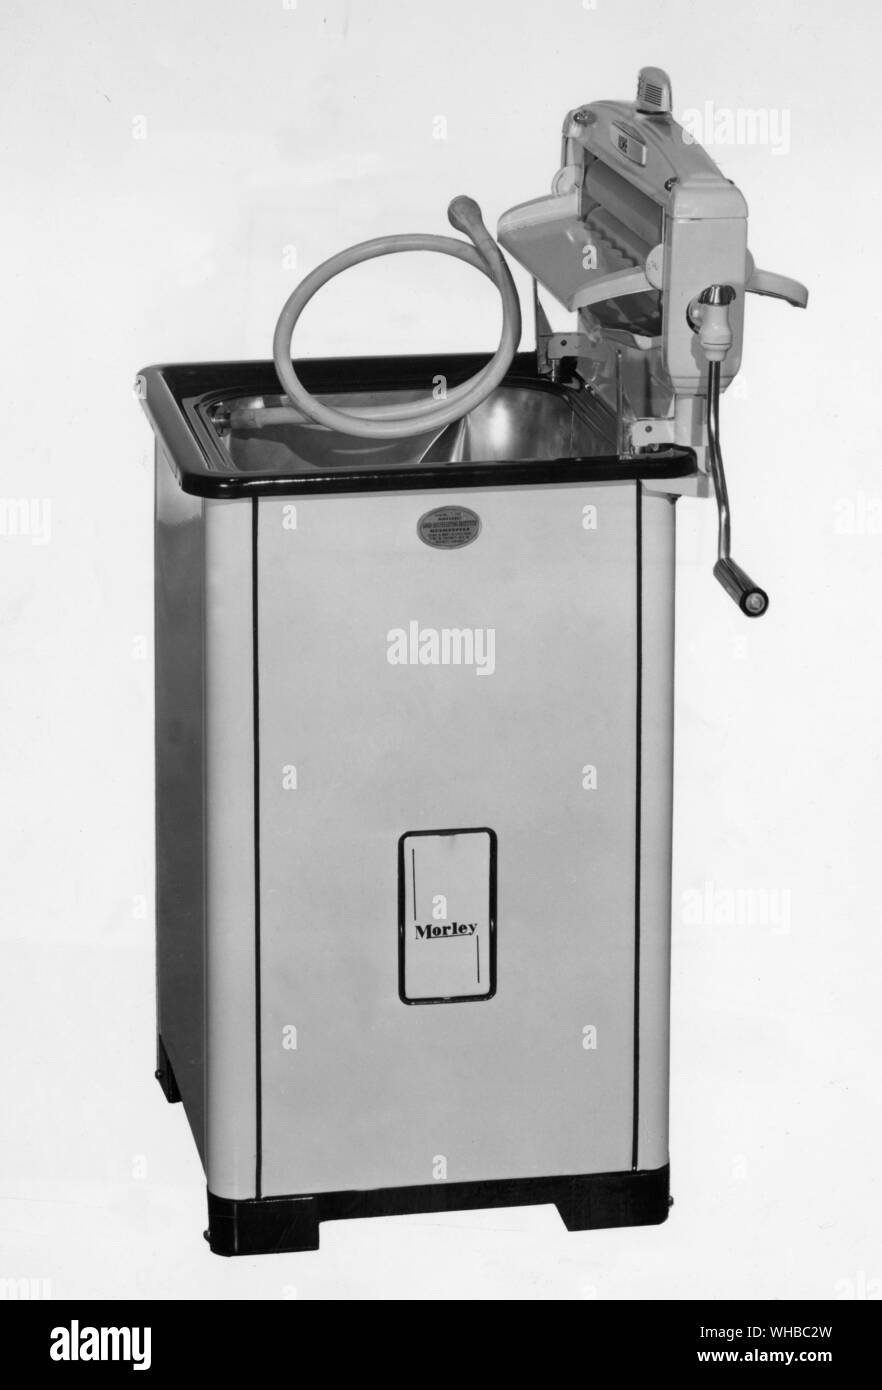 Morley - gas/electric washing machine. Stock Photo